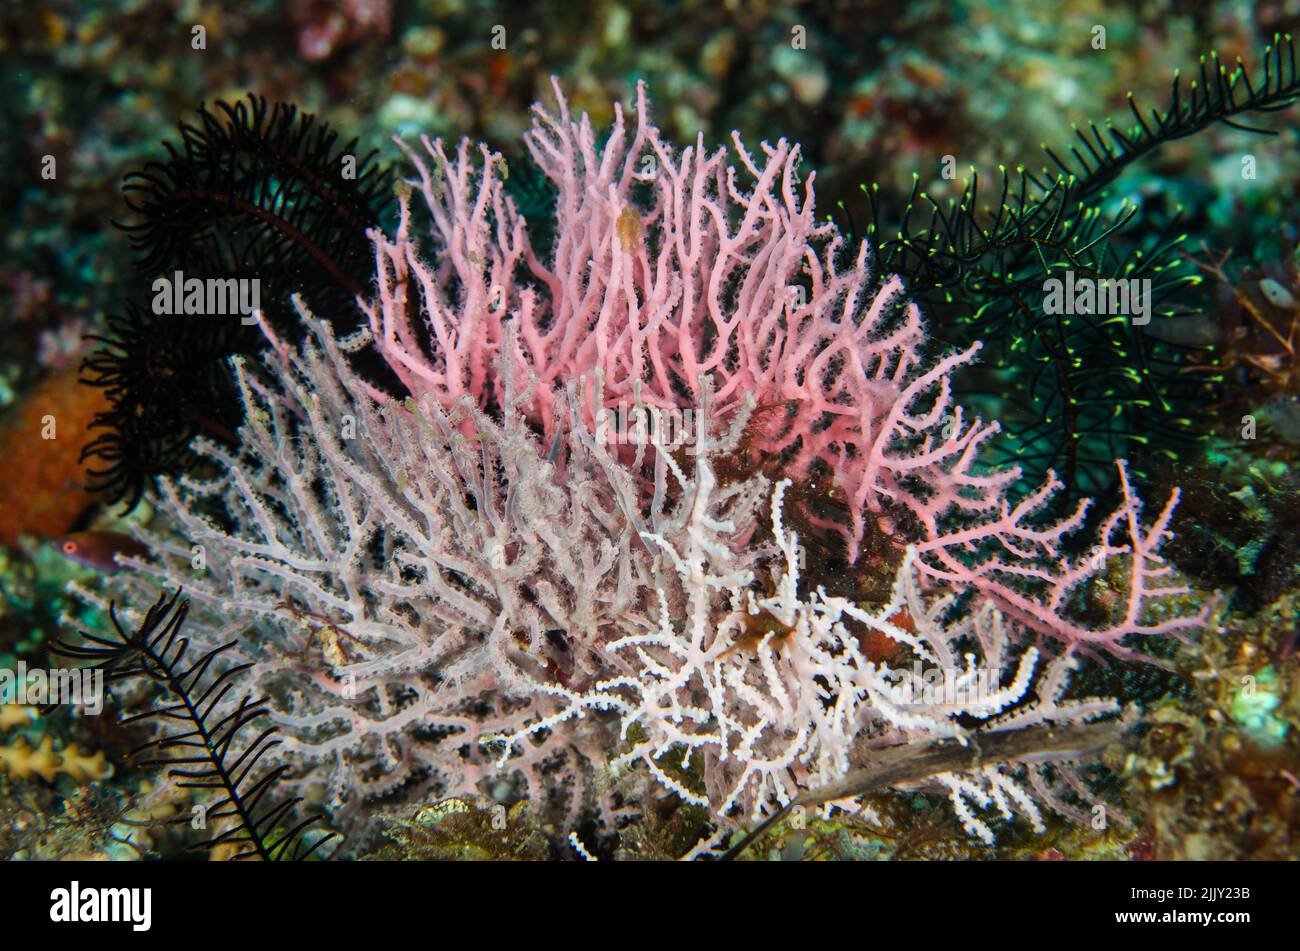 Corallo del ventilatore annodato, Melithaea sp., Melithaeidae, Anilao, Batangas, Filippine, Oceano Indo-pacifico, Asia Foto Stock